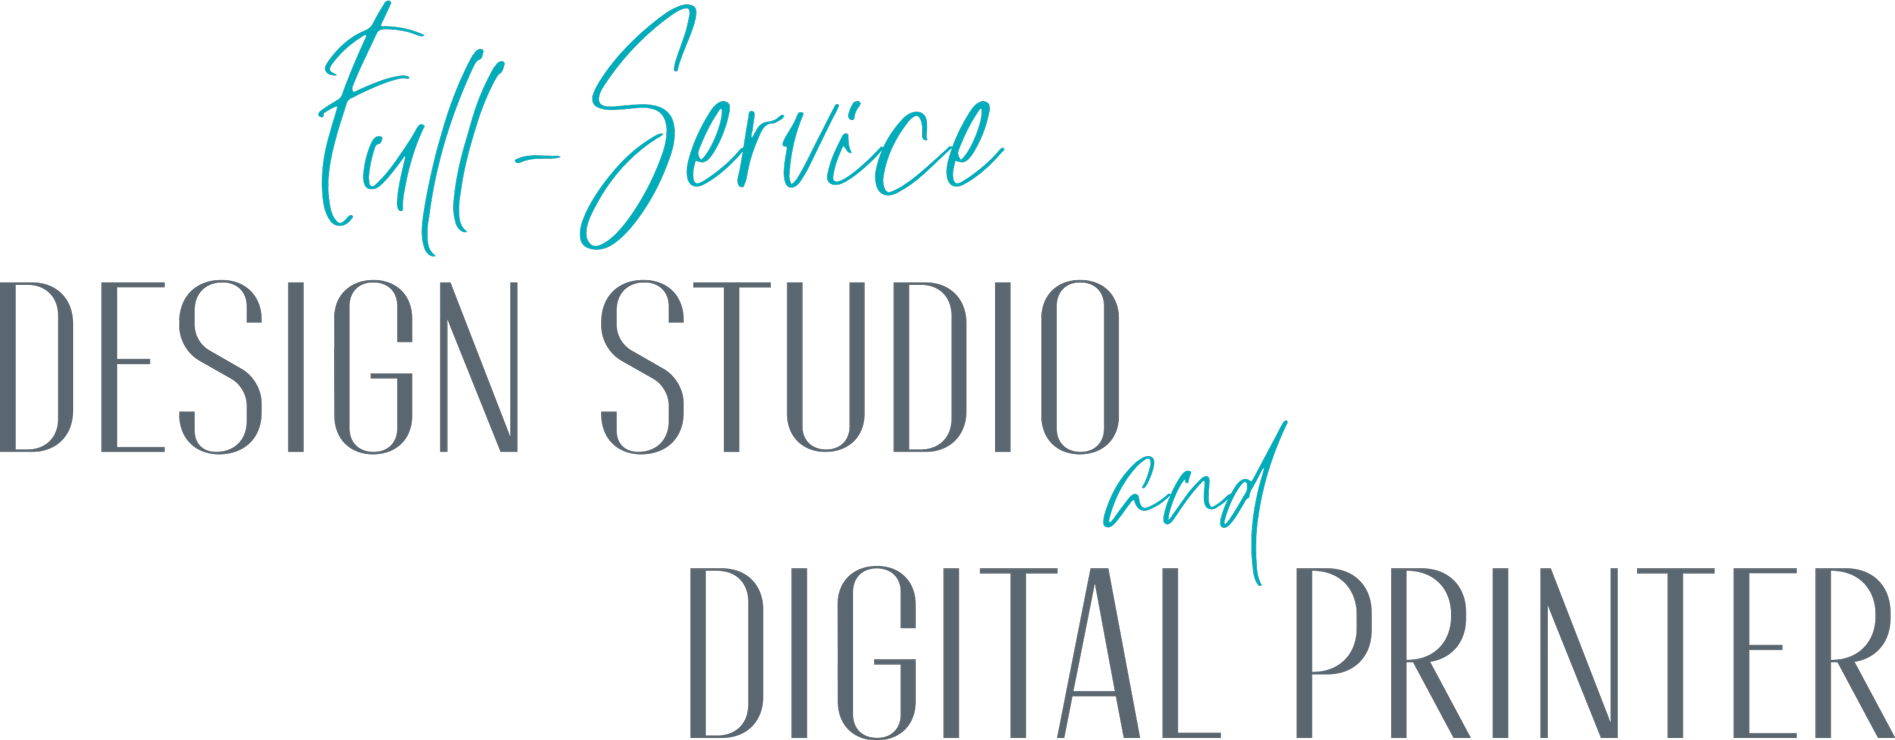 Full Service Design Studio and Digital Printer